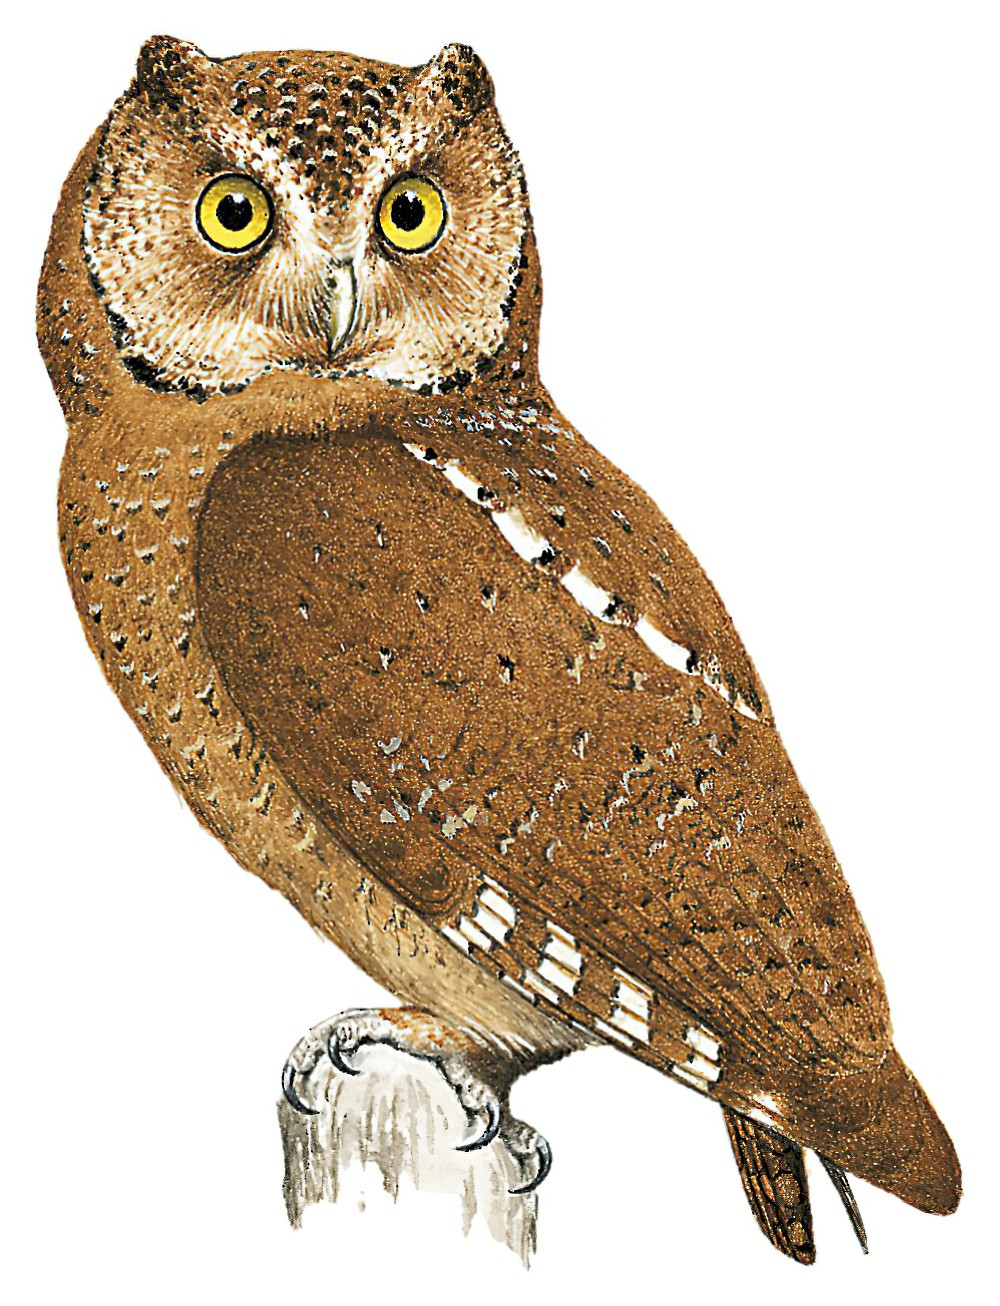 Mountain Scops-Owl / Otus spilocephalus